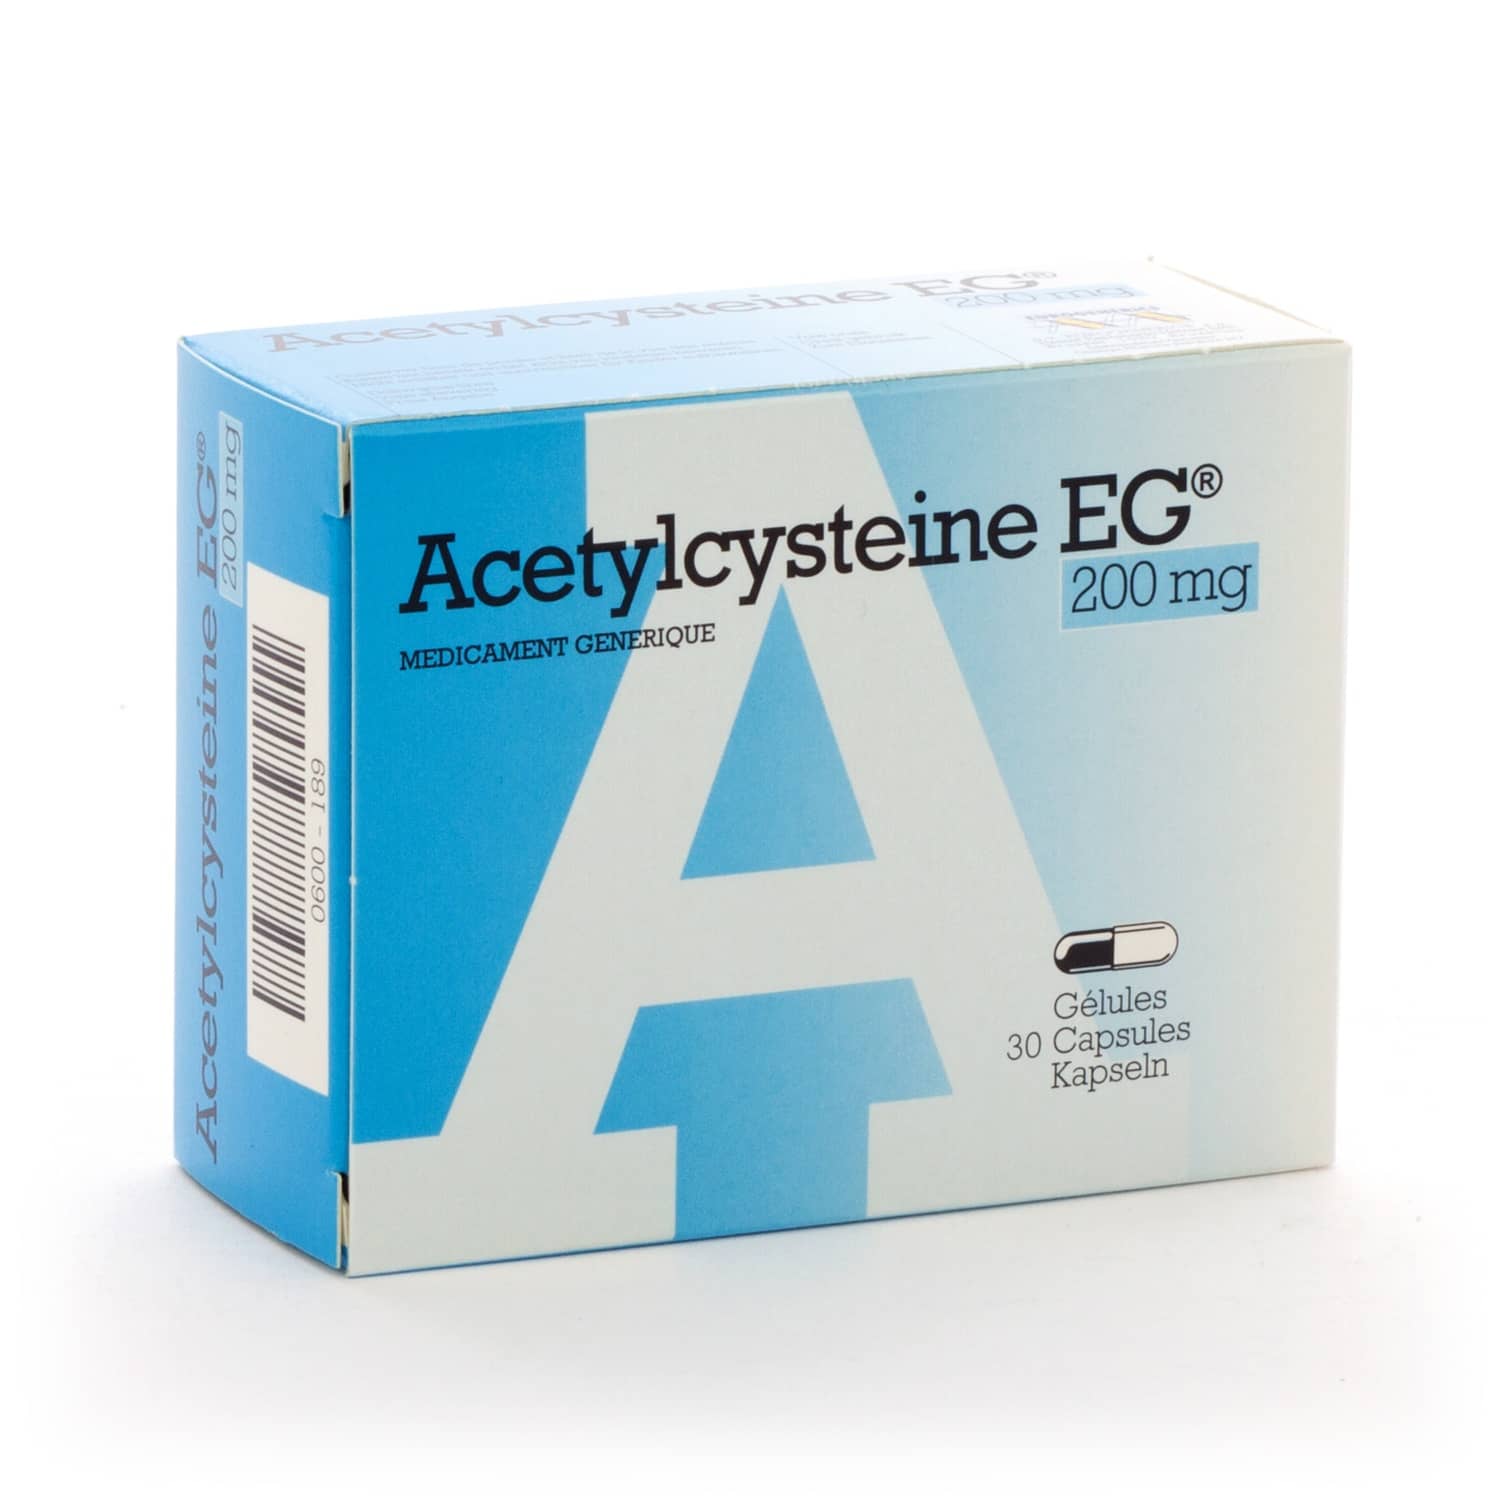 Acetylcysteine EG 200 mg